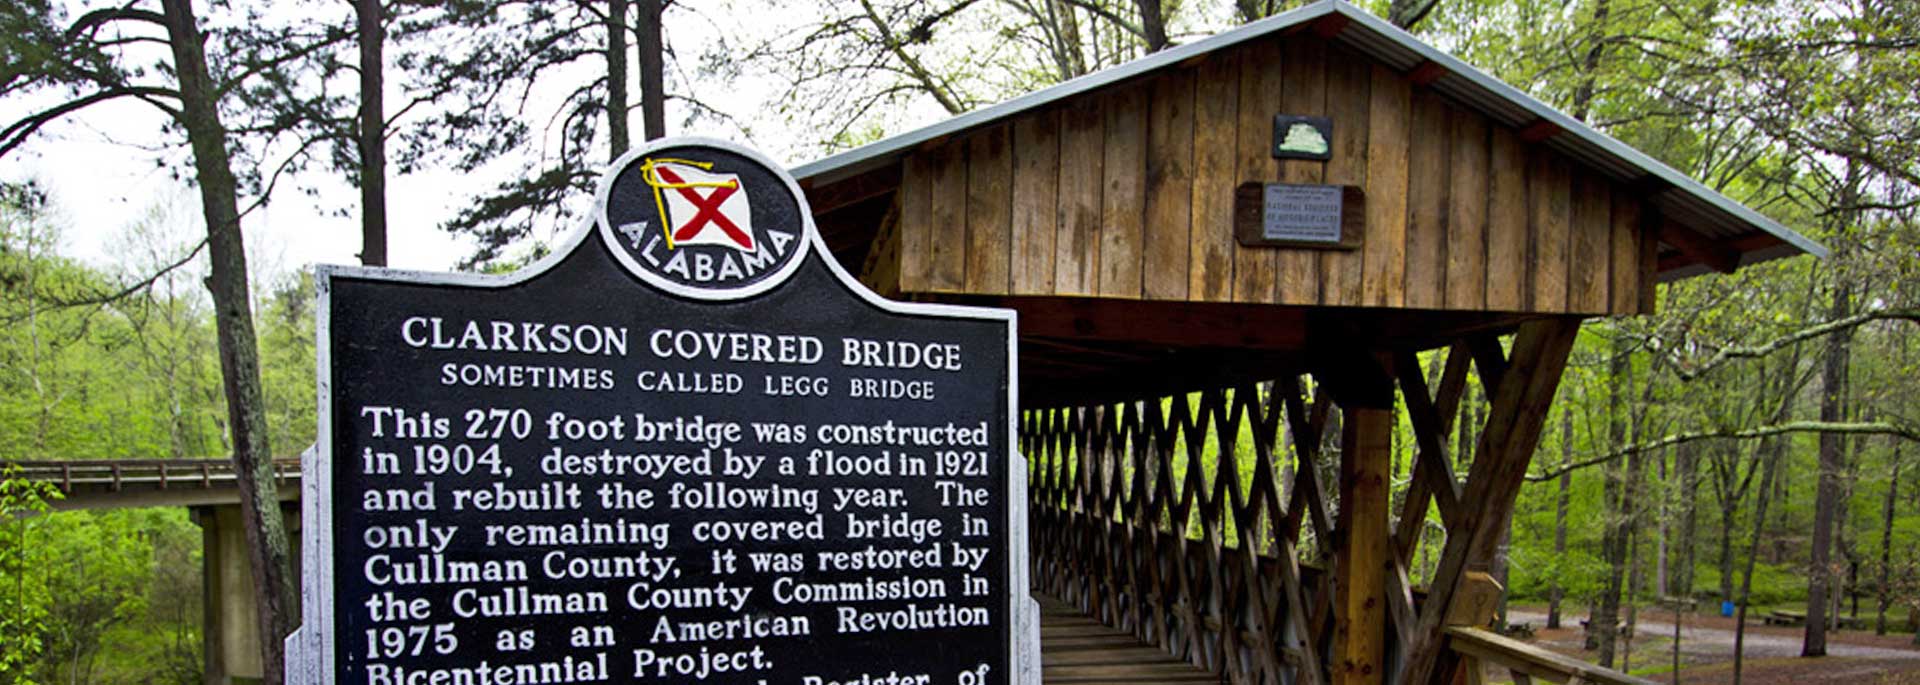 Clarkson Covered Bridge in Cullman County, Alabama